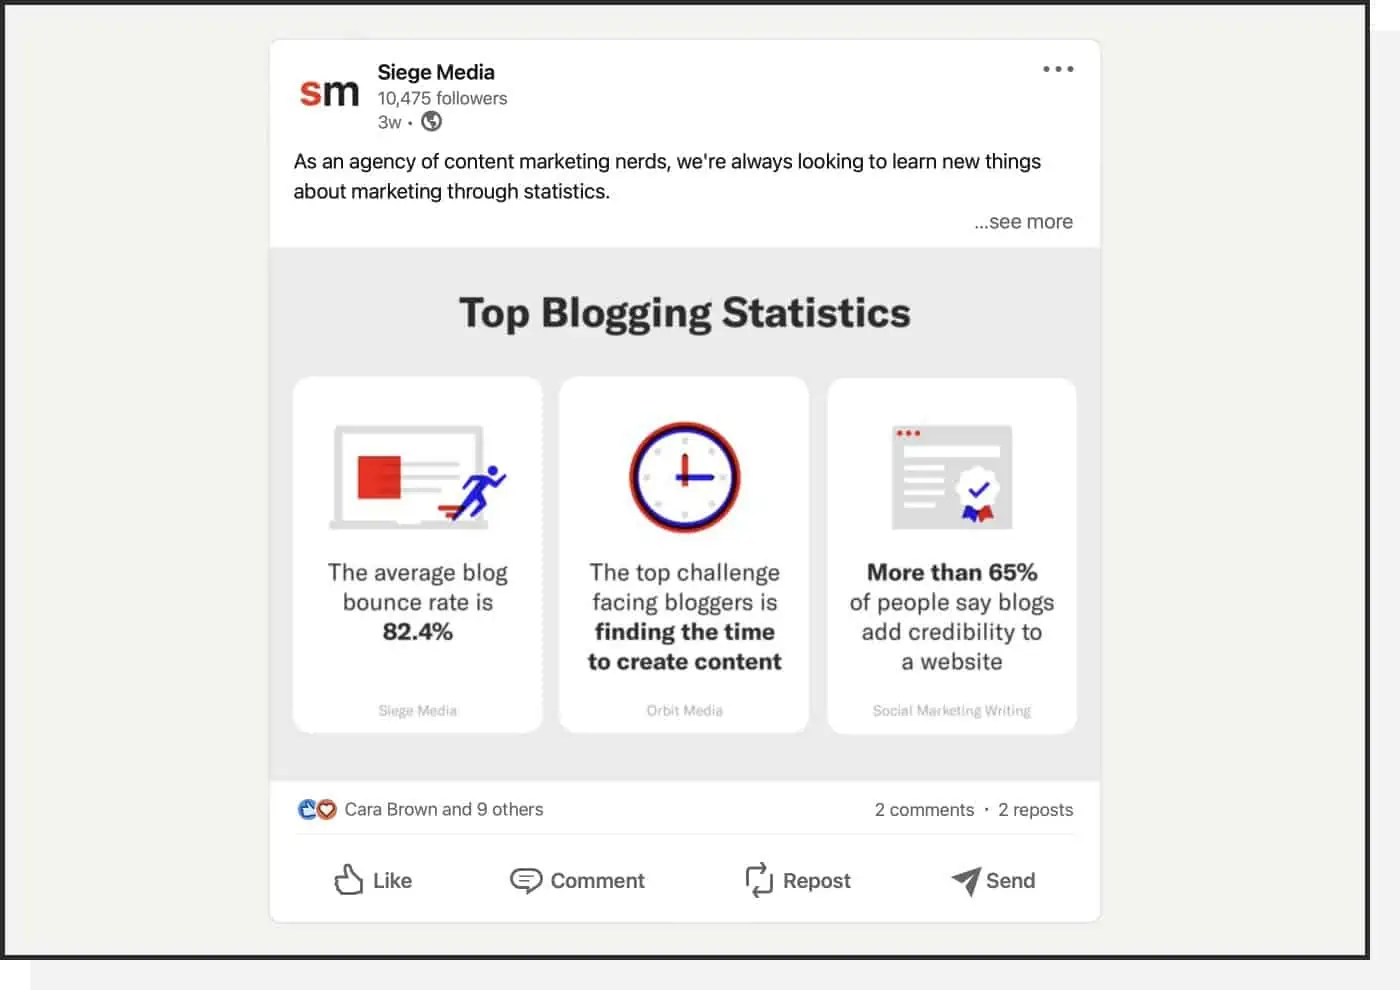 Example of Siege Media LinkedIn social media post on blogging statistics